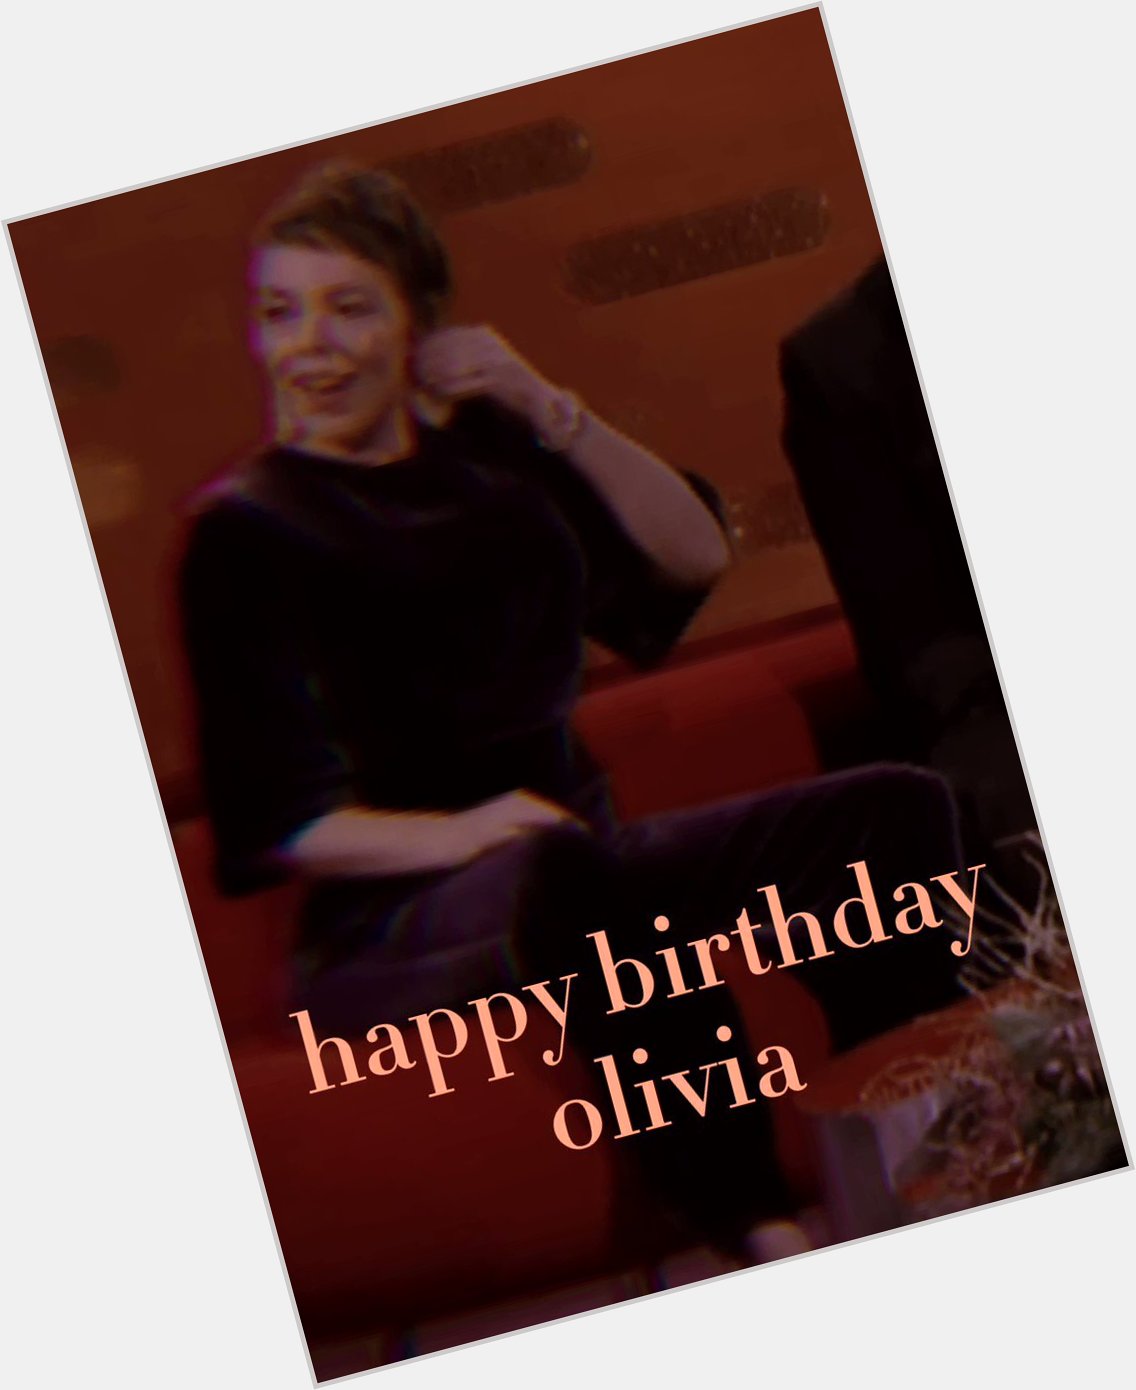 Happy birthday Olivia Colman !! 